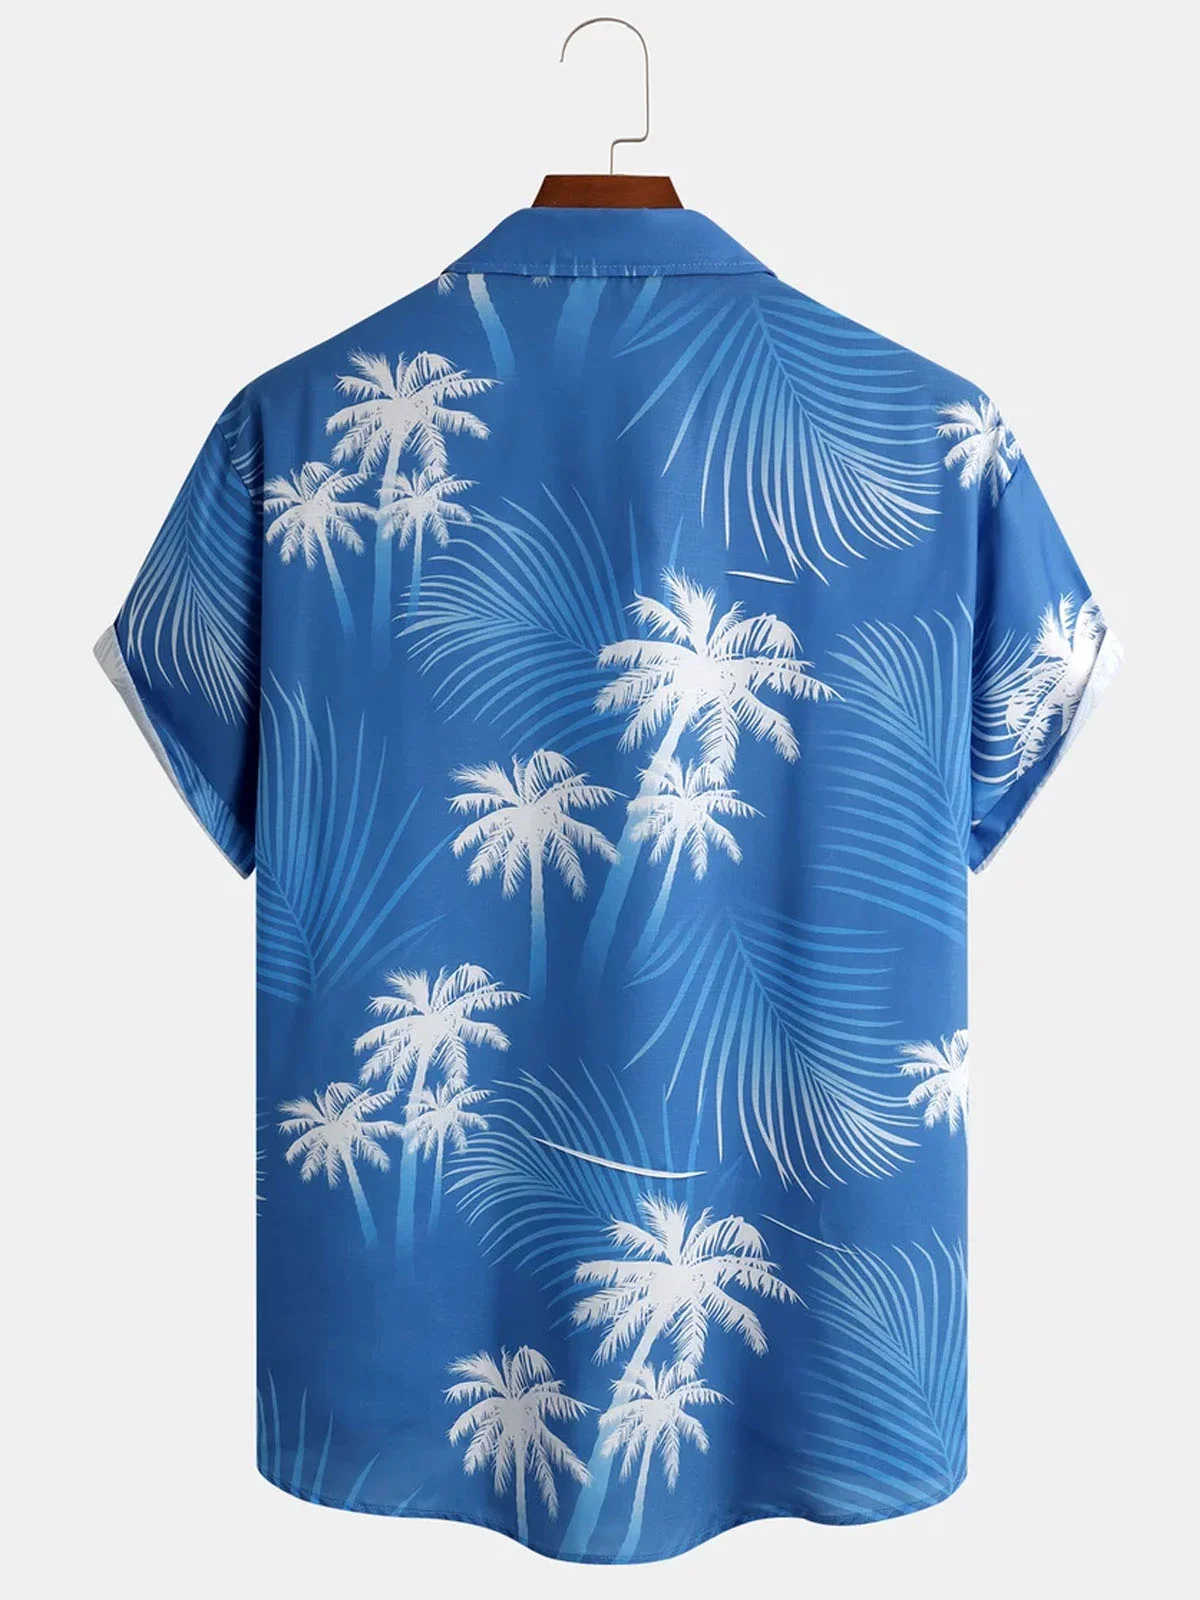 Royaura Hawaiian Coconut Tree Leaf Print Men's Button Pocket Shirt